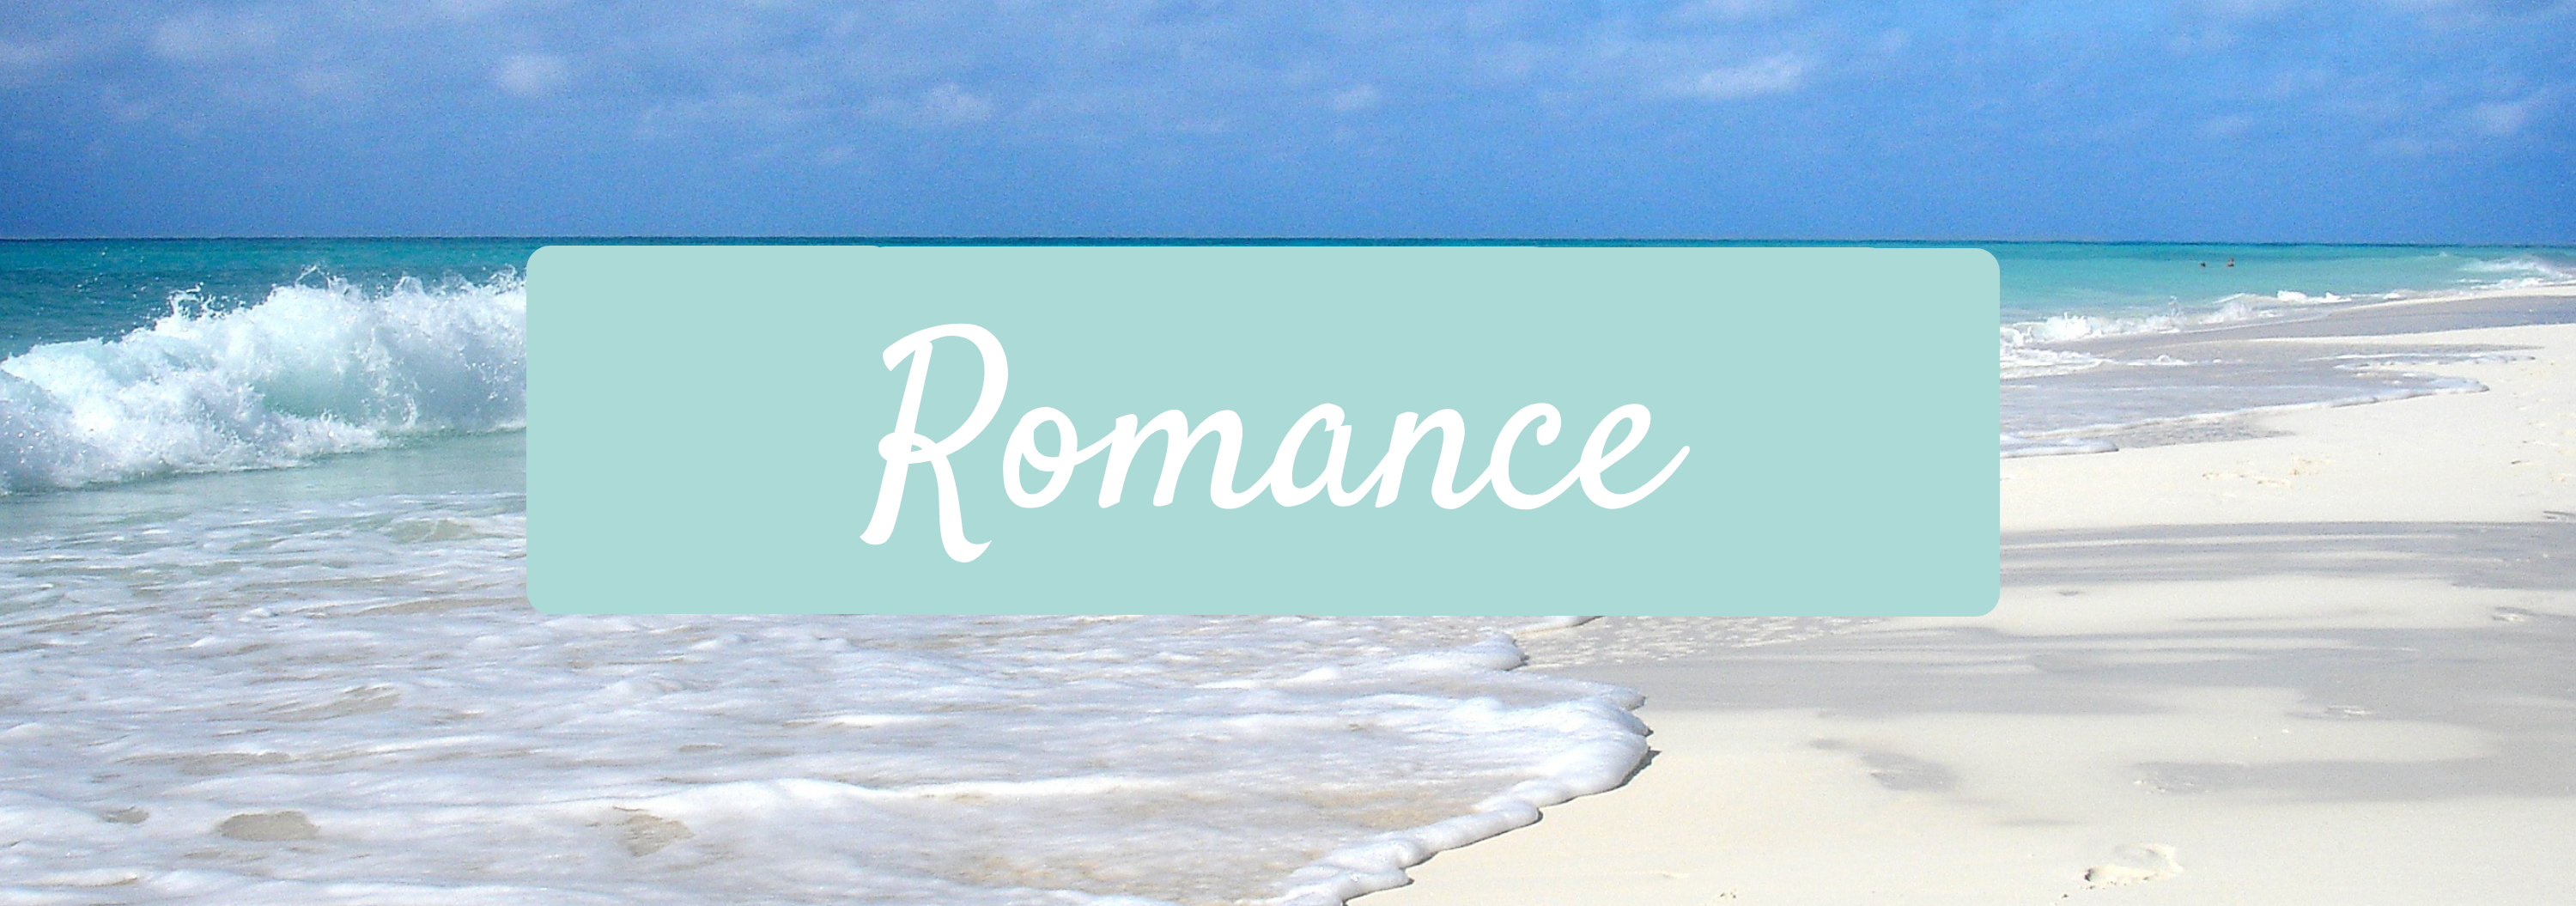 Summer-Reads_-Romance